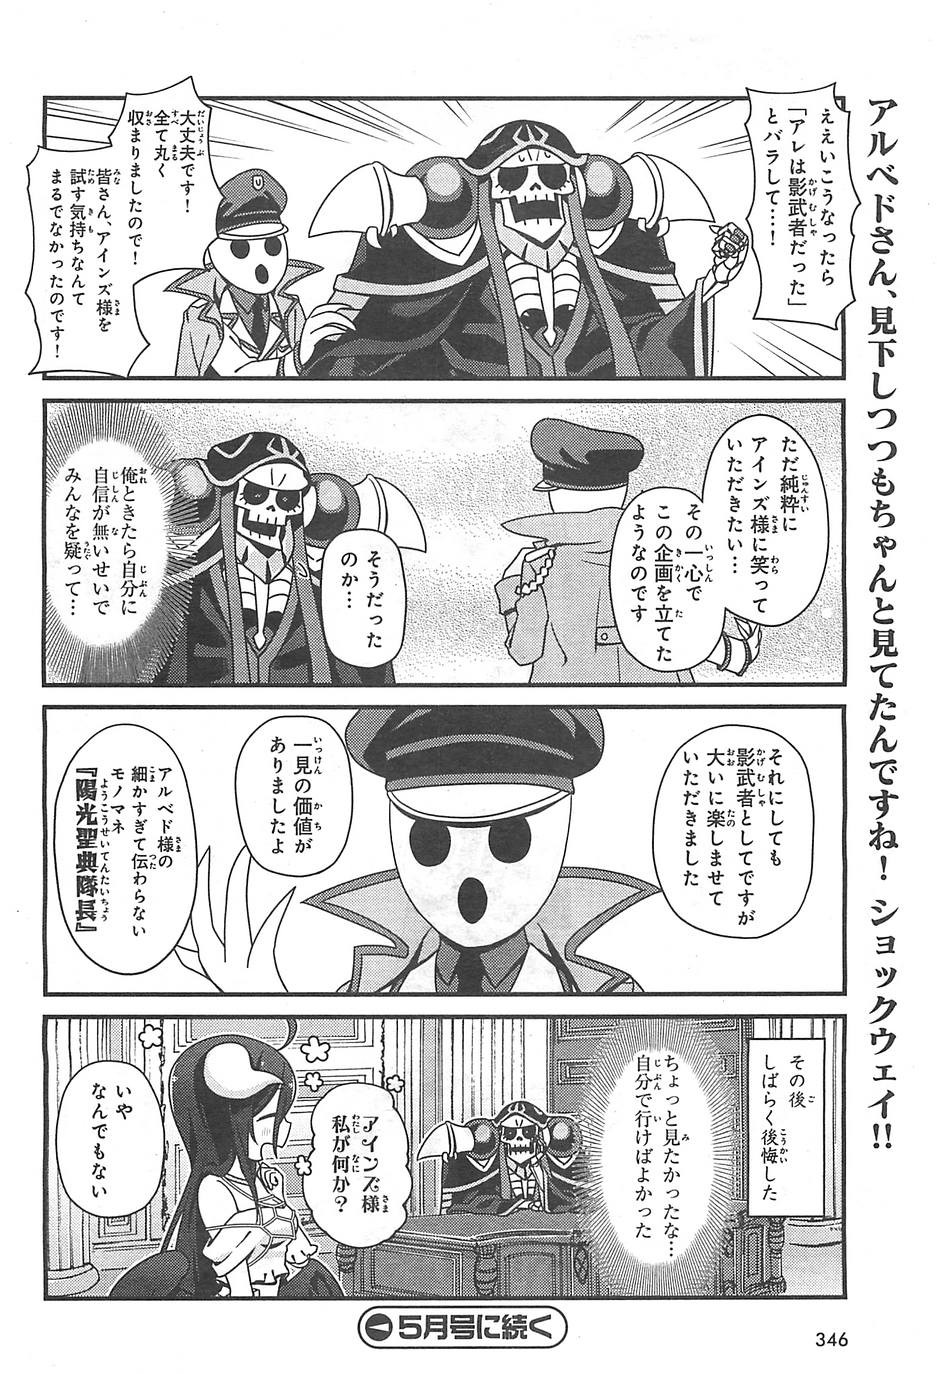 Overlord-Fushisha-no-Oh - Chapter 02 - Page 20